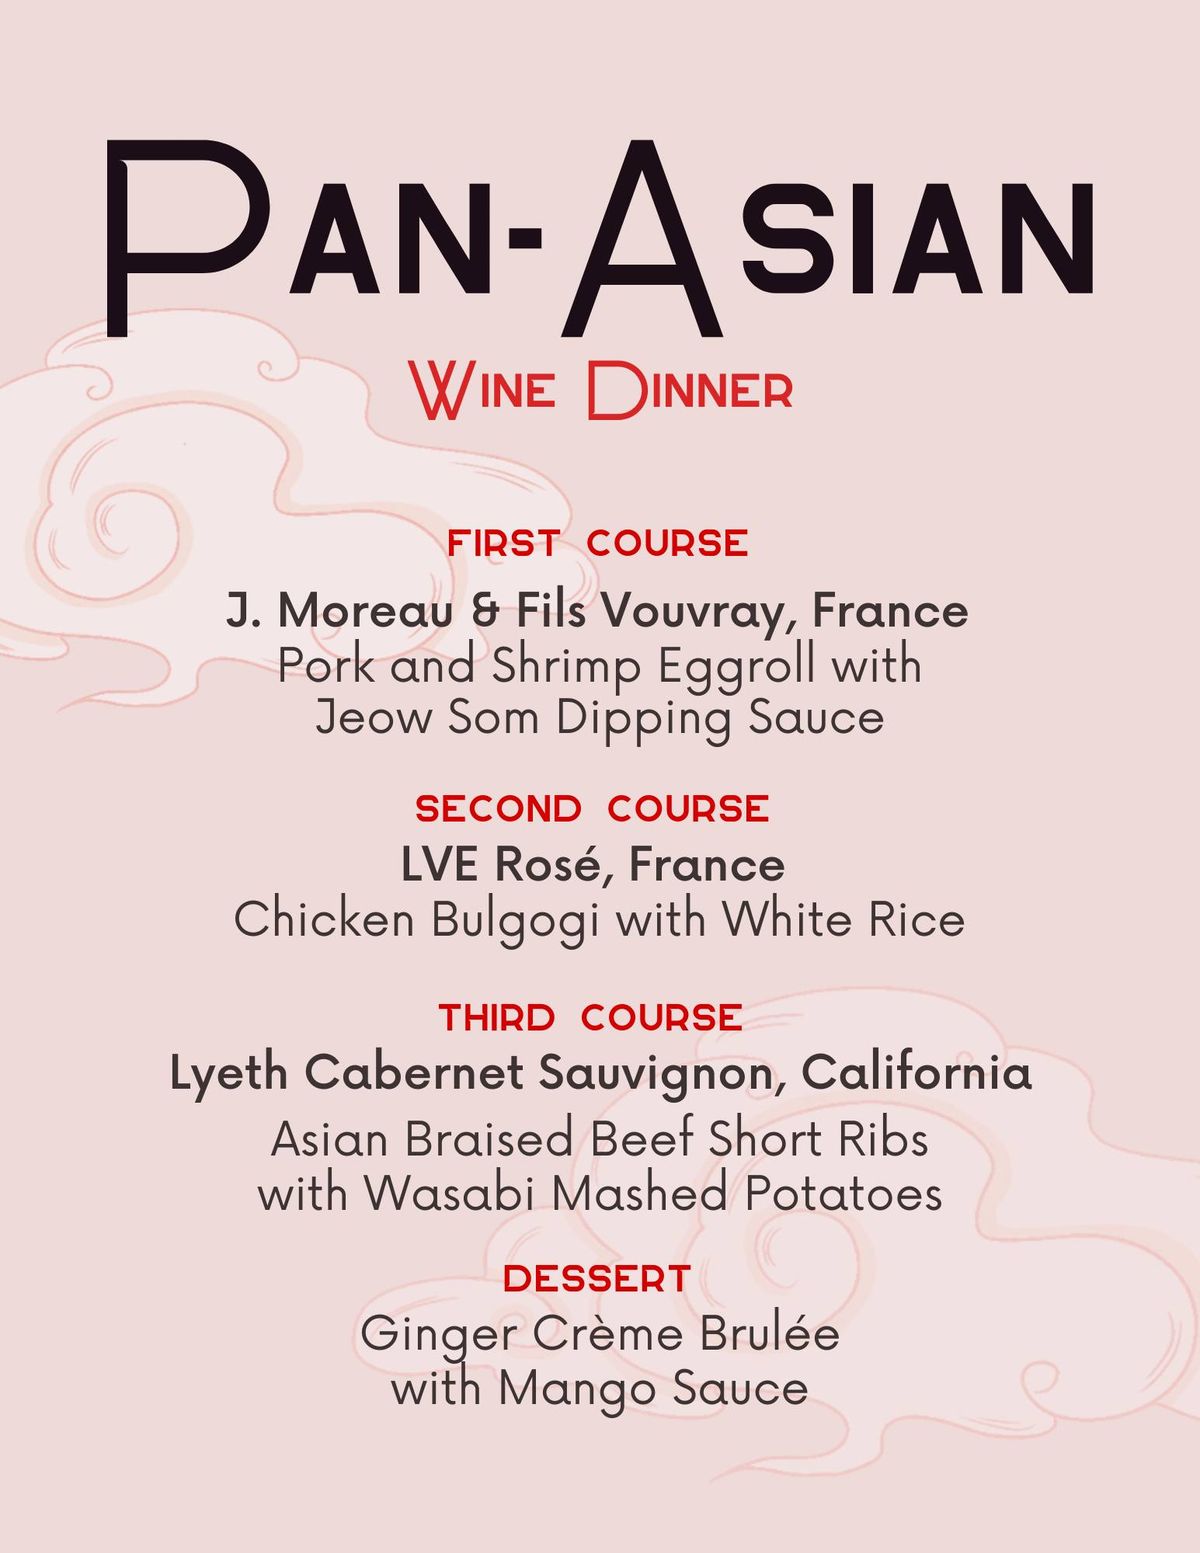 Pan-Asian Wine Dinner